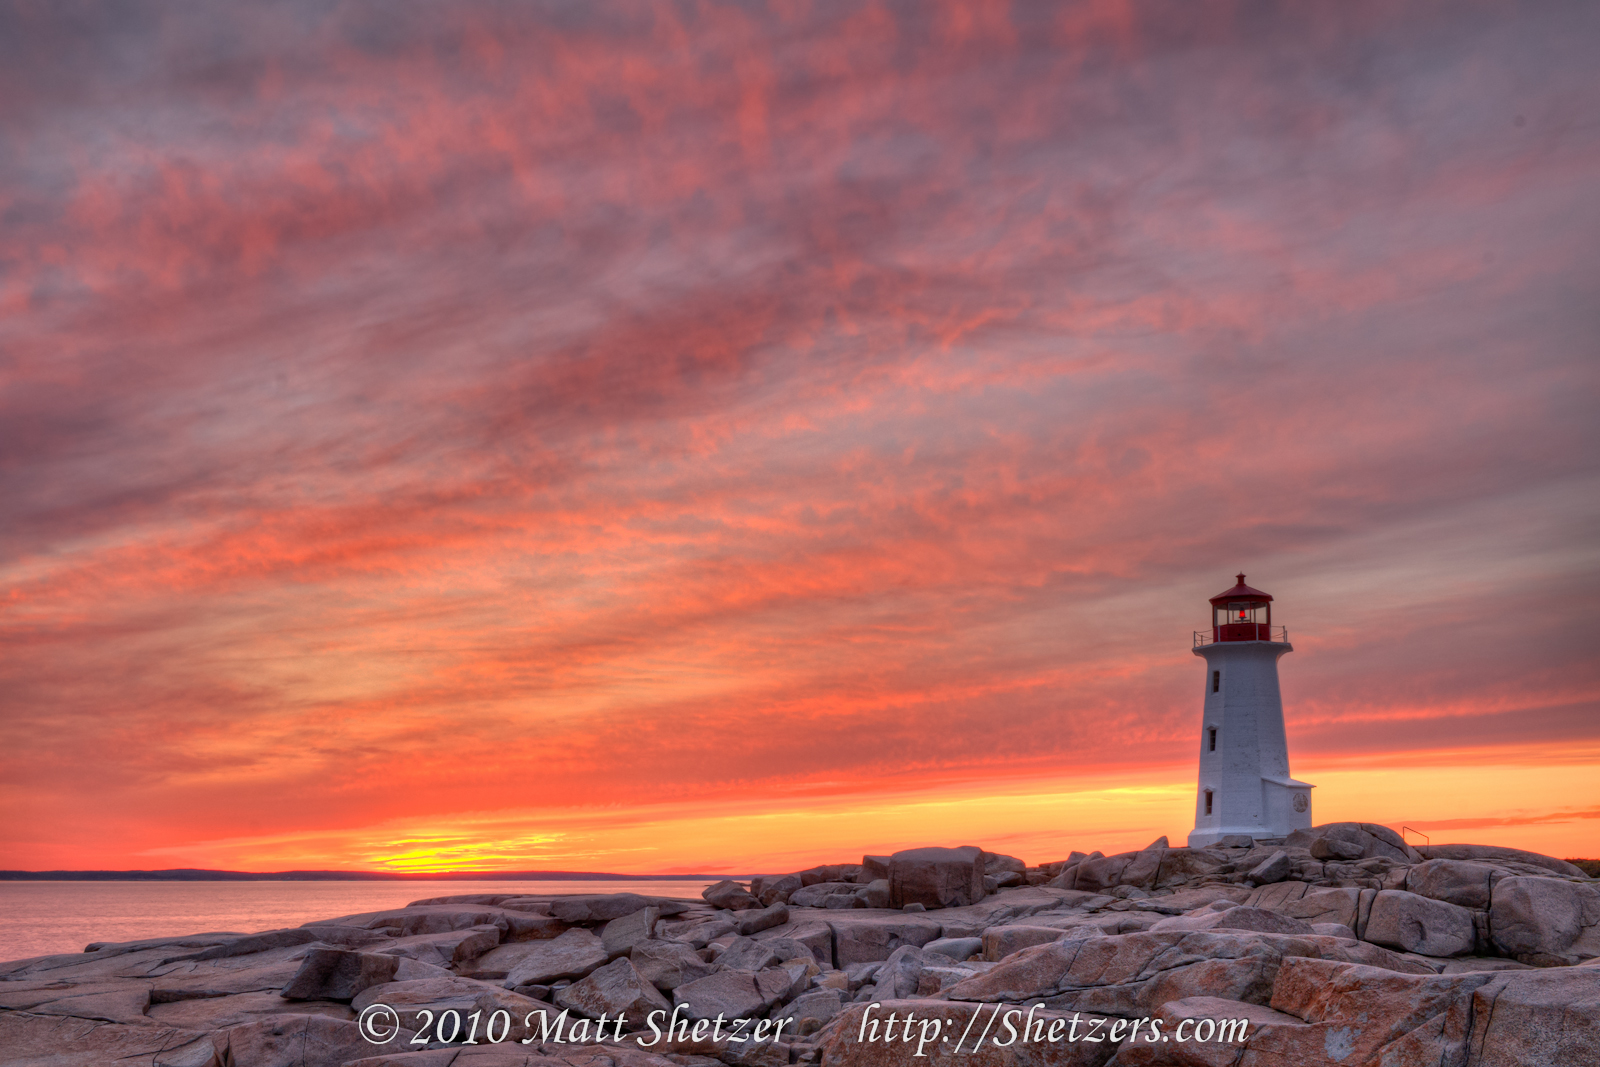 Our Travel Newfoundland Update Lighthouse Photos